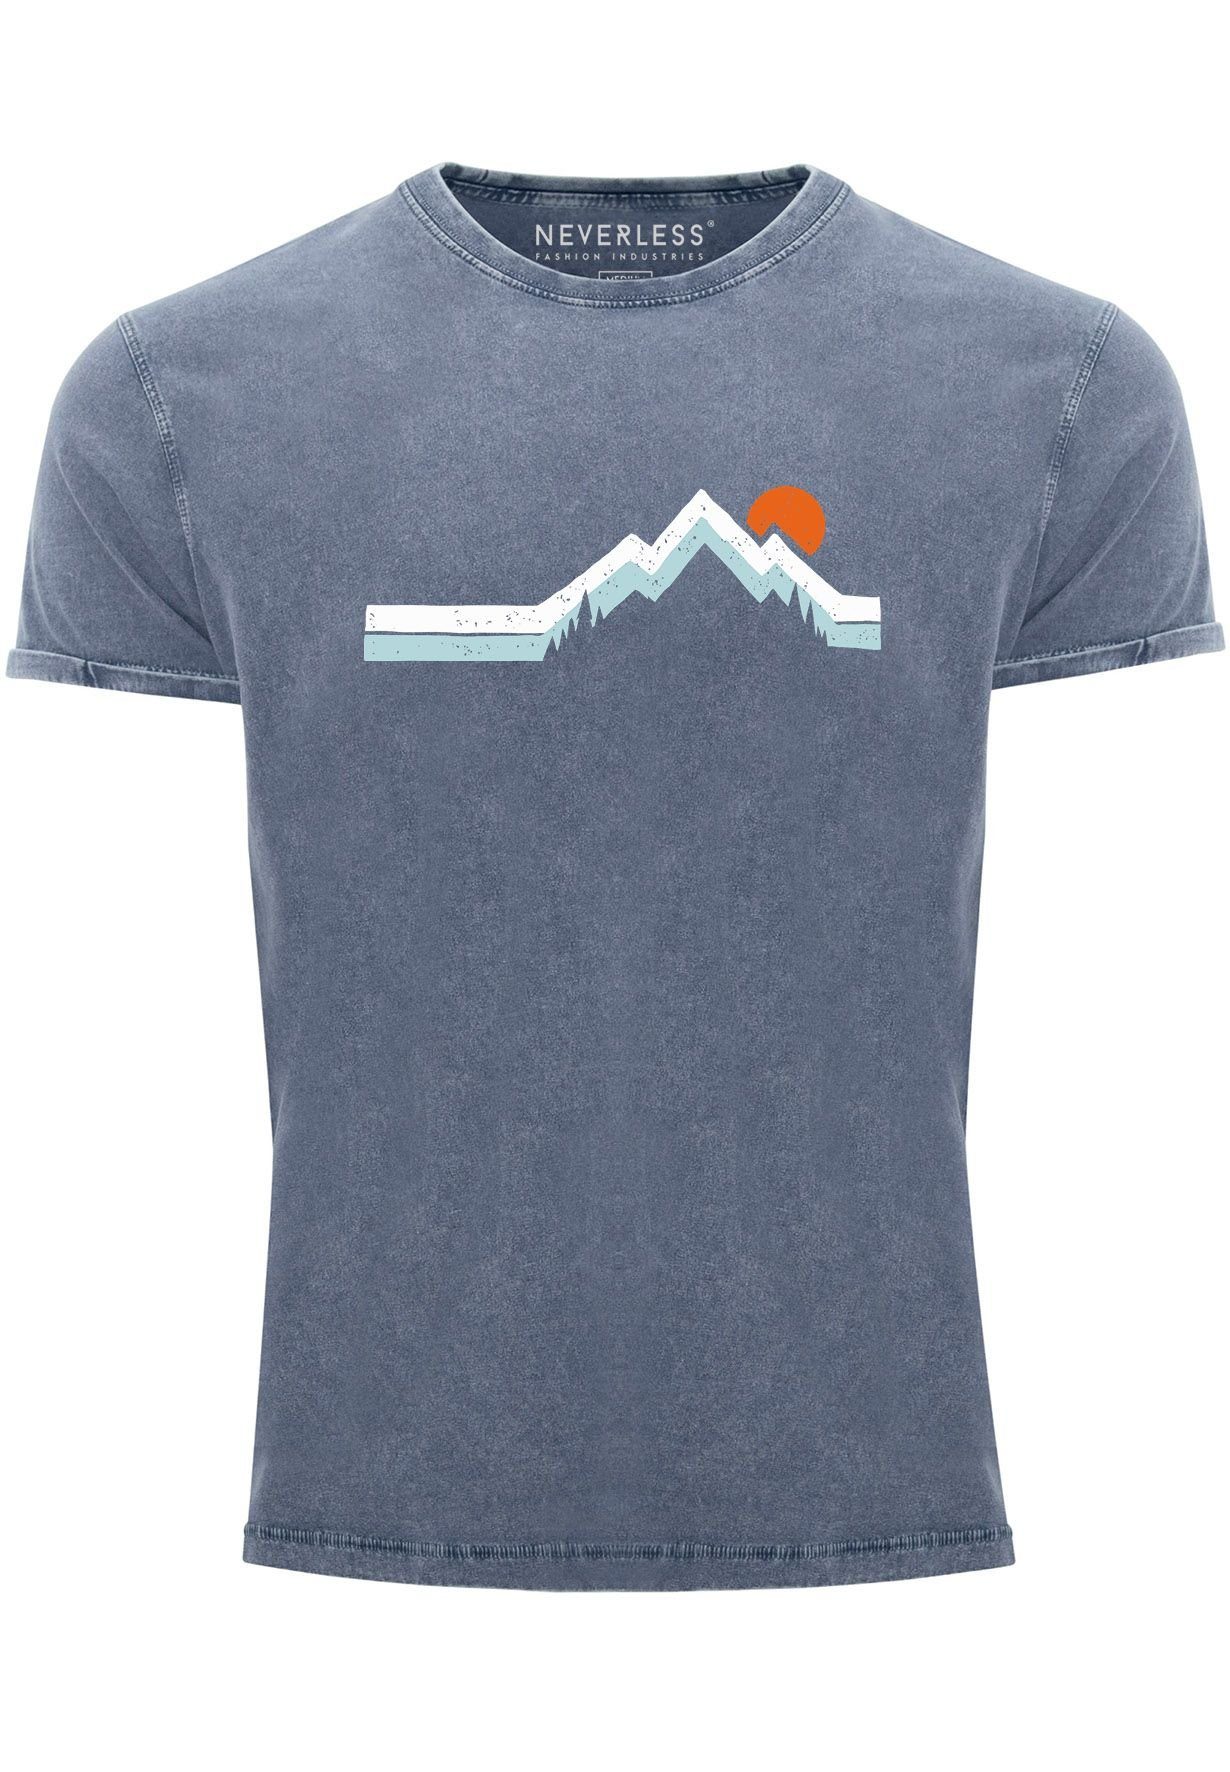 Neverless Print-Shirt Herren Vintage-Shirt Berg Wandern Natur Outdoor Printshirt T-Shirt Auf mit Print